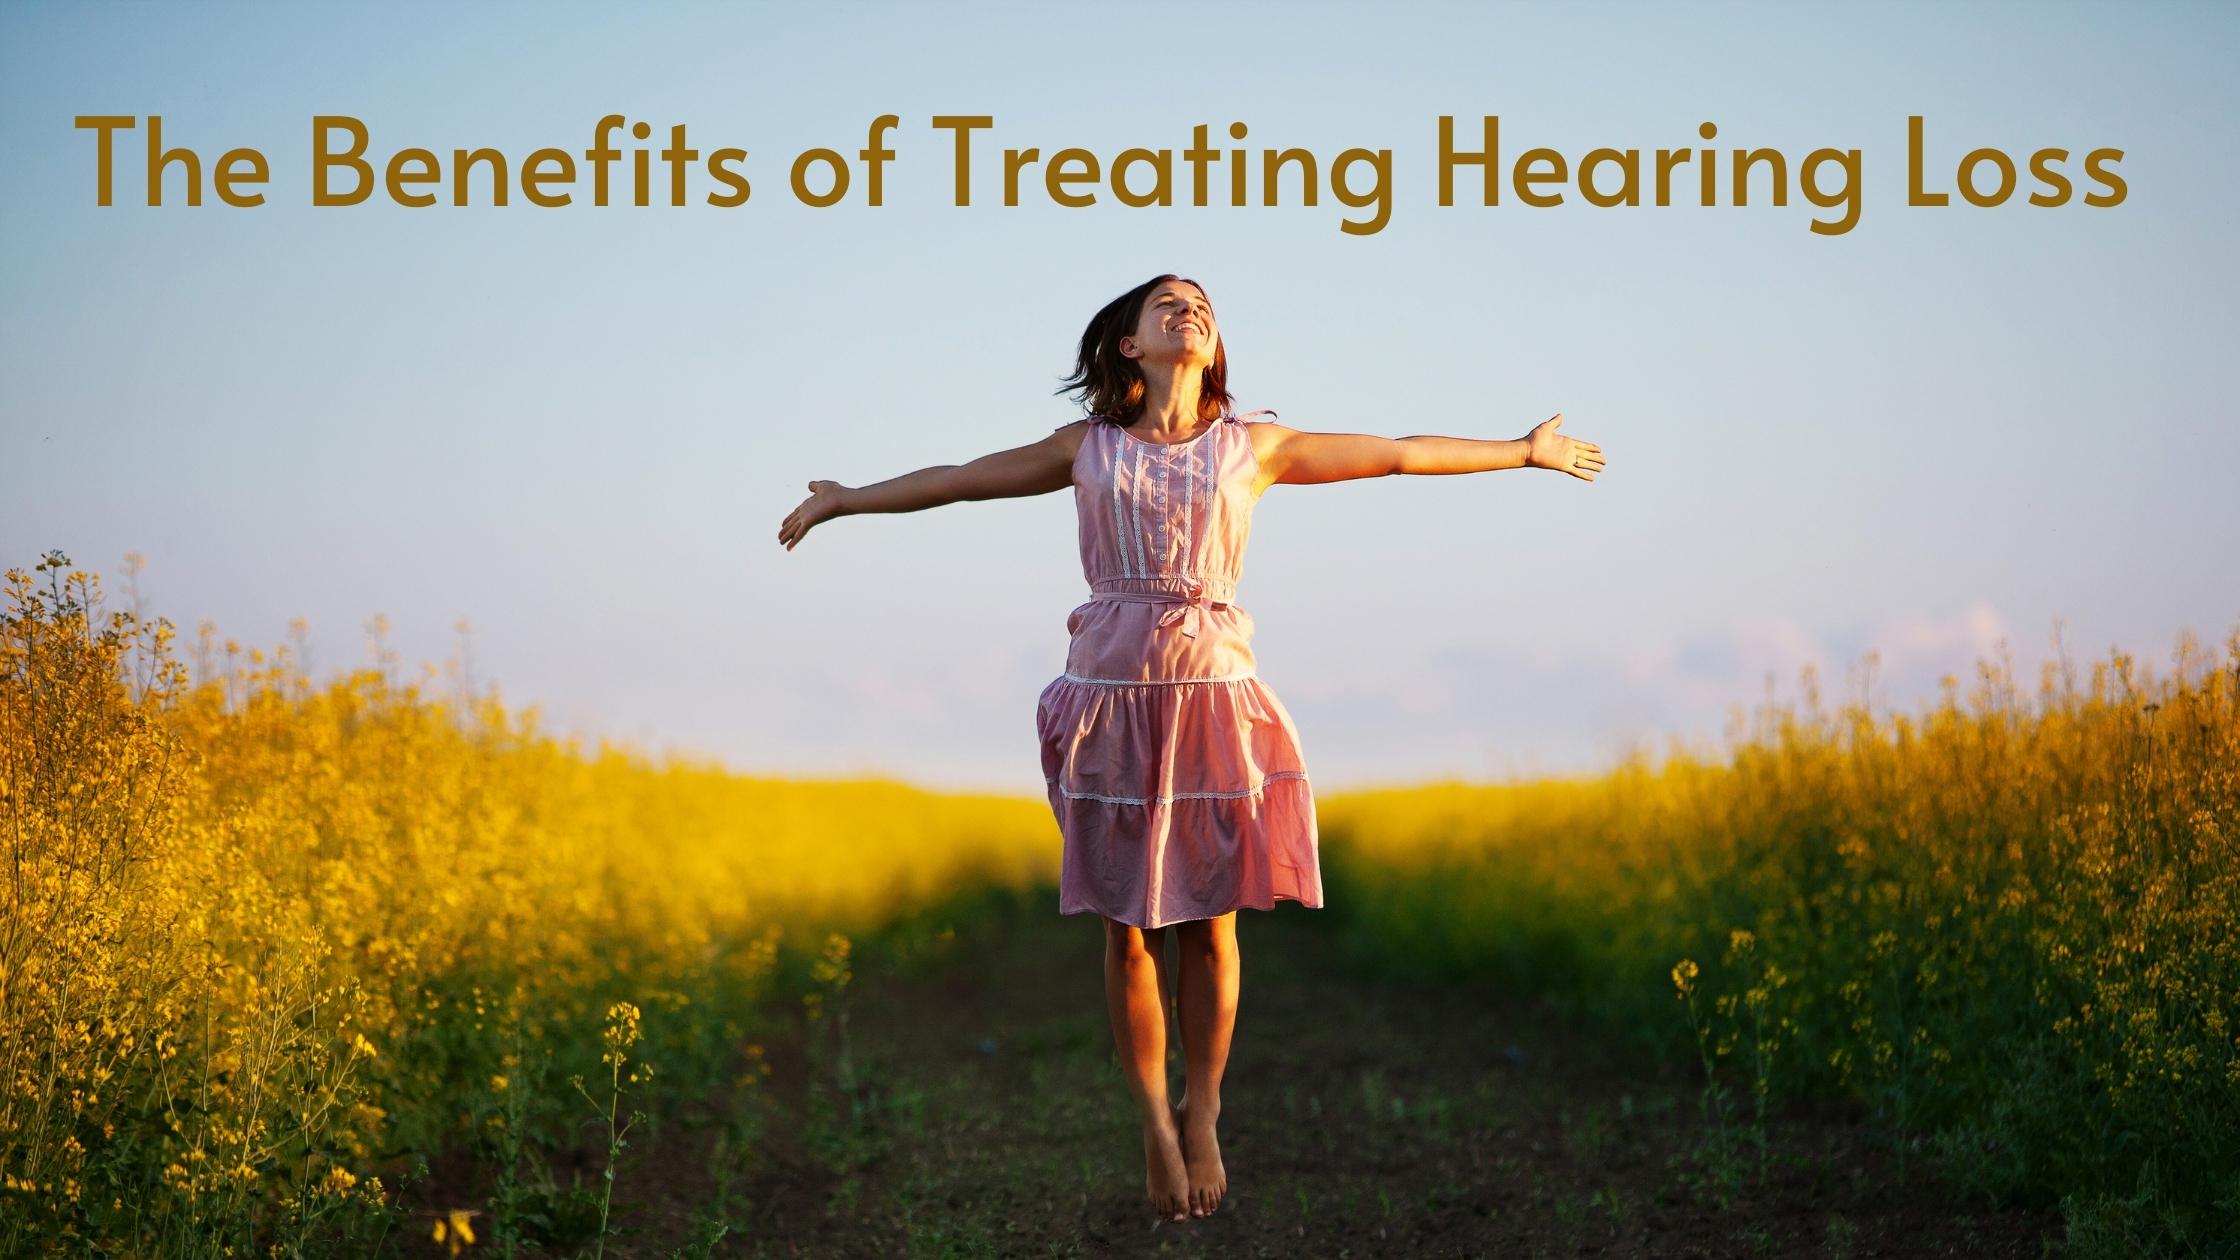 The Benefits of Treating Hearing Loss